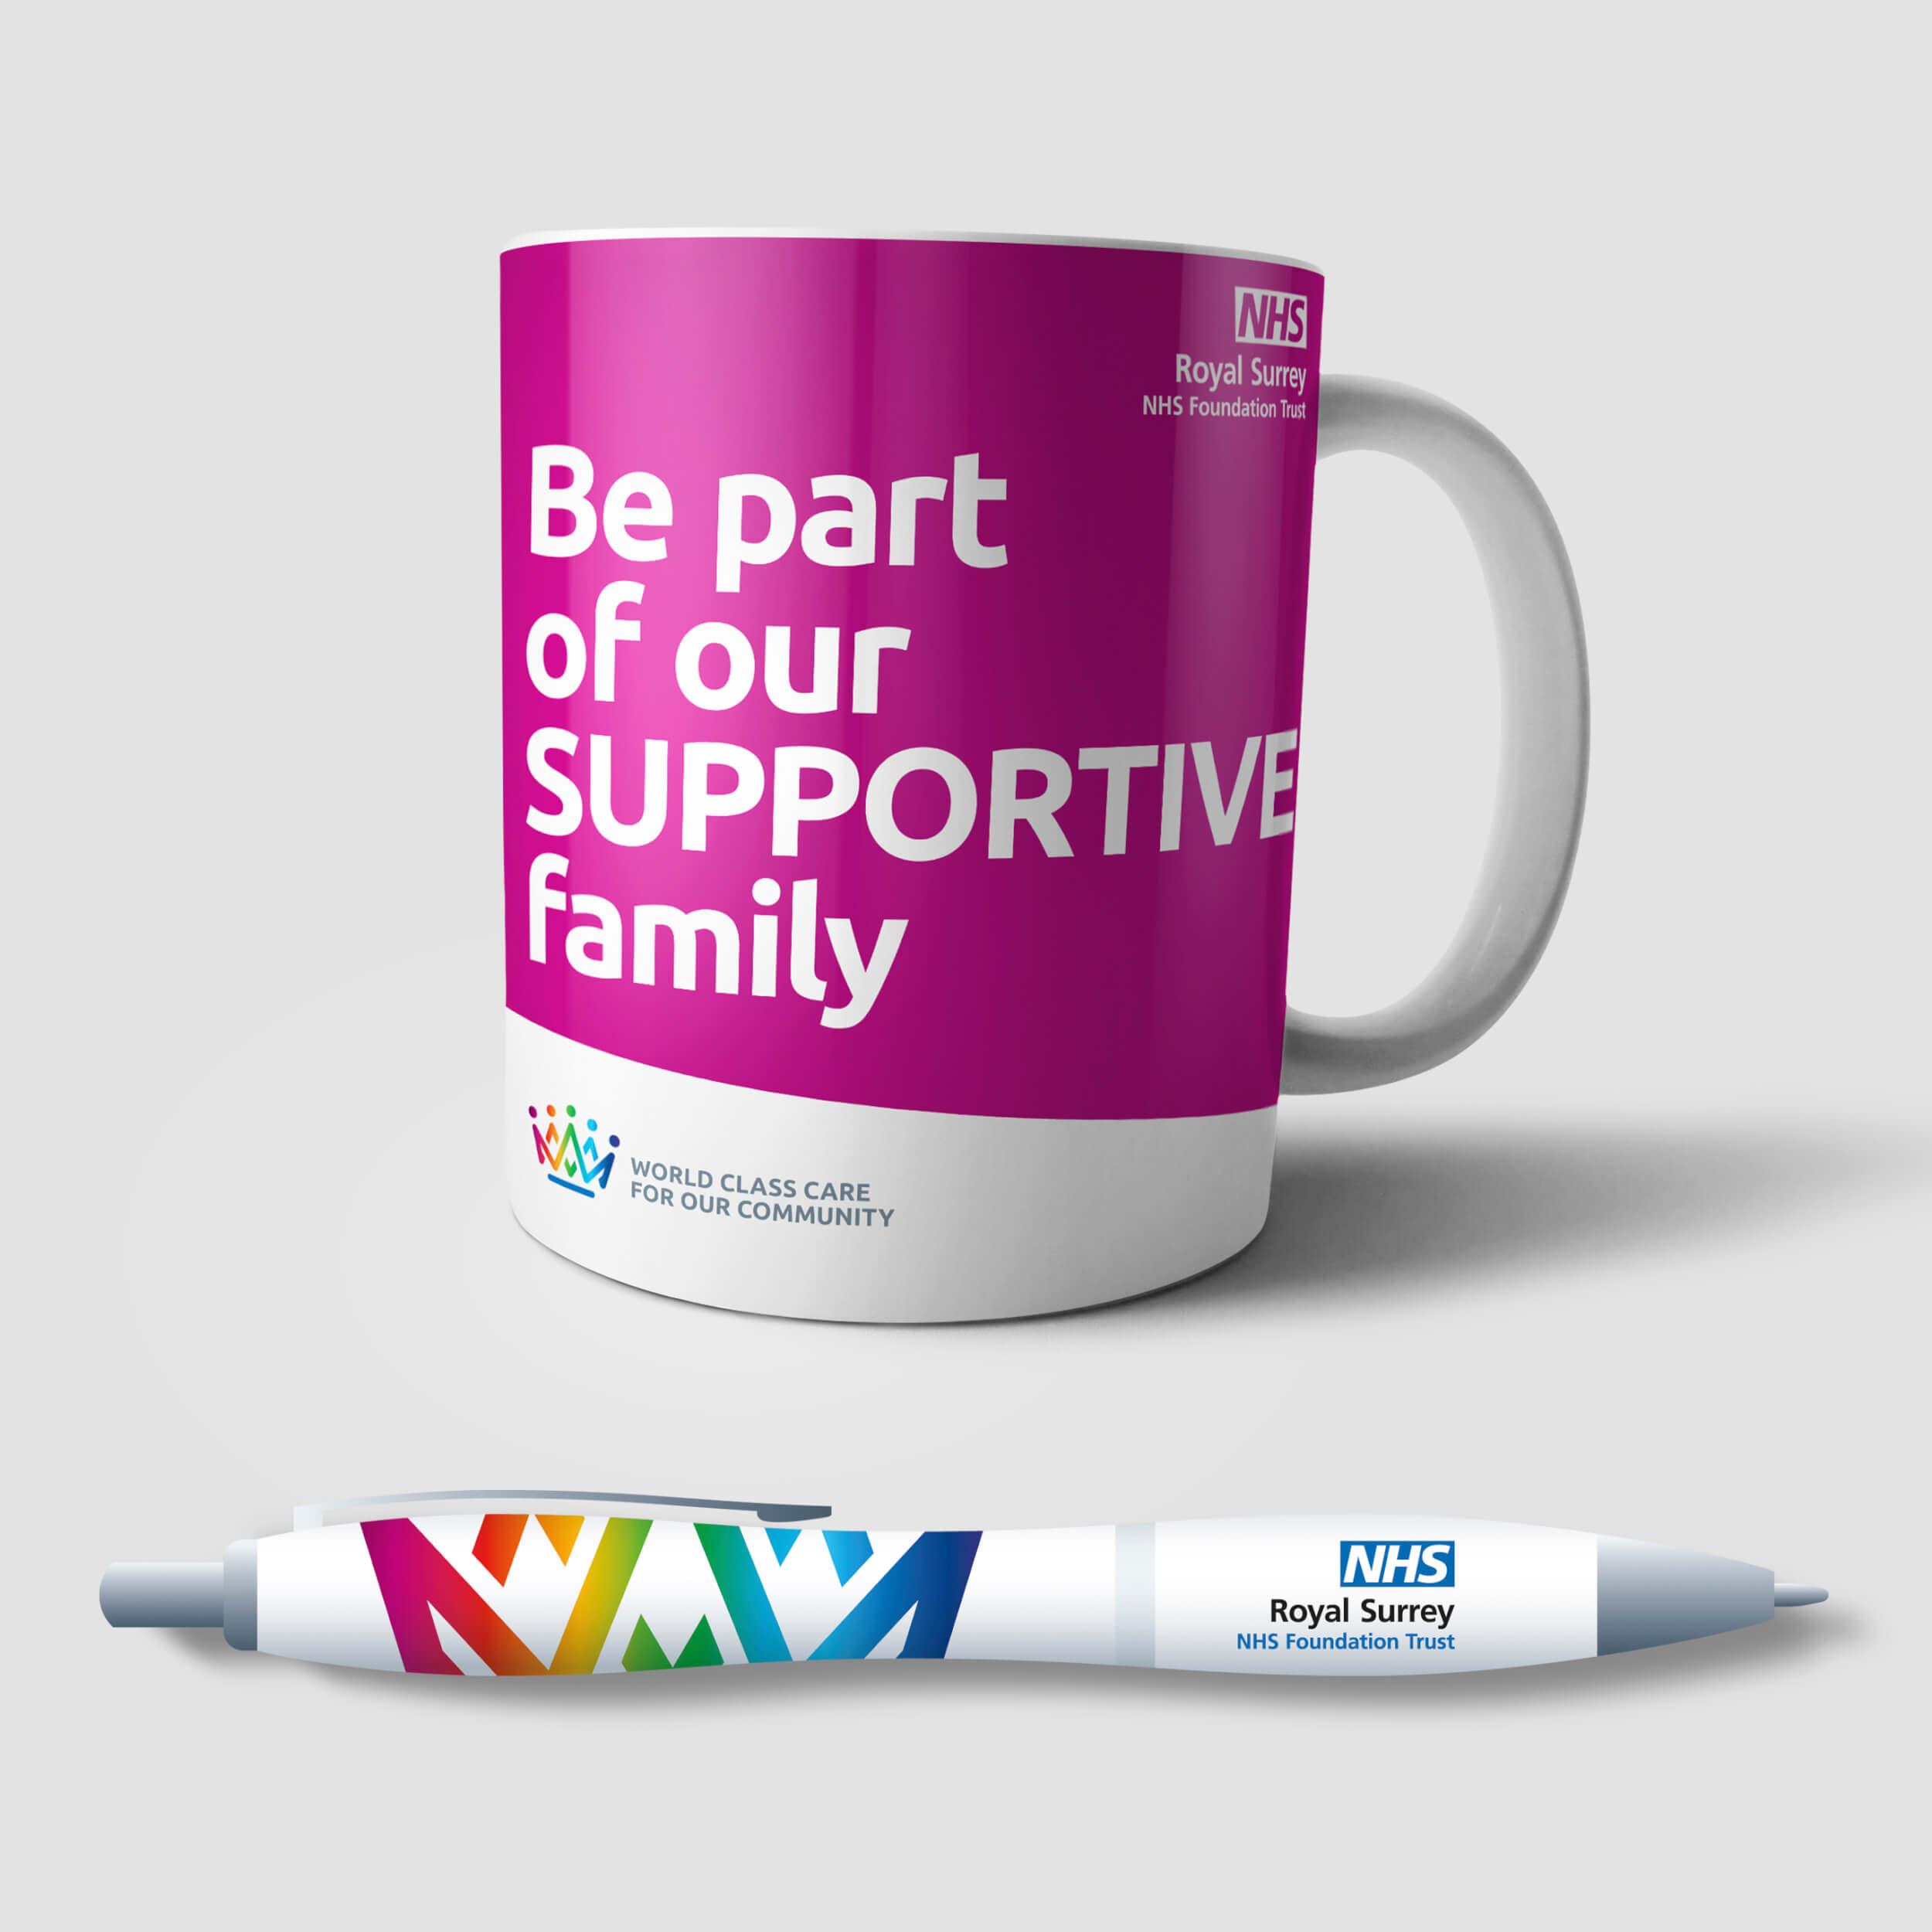 NHS Royal Surrey recruitment campaign mug and pen